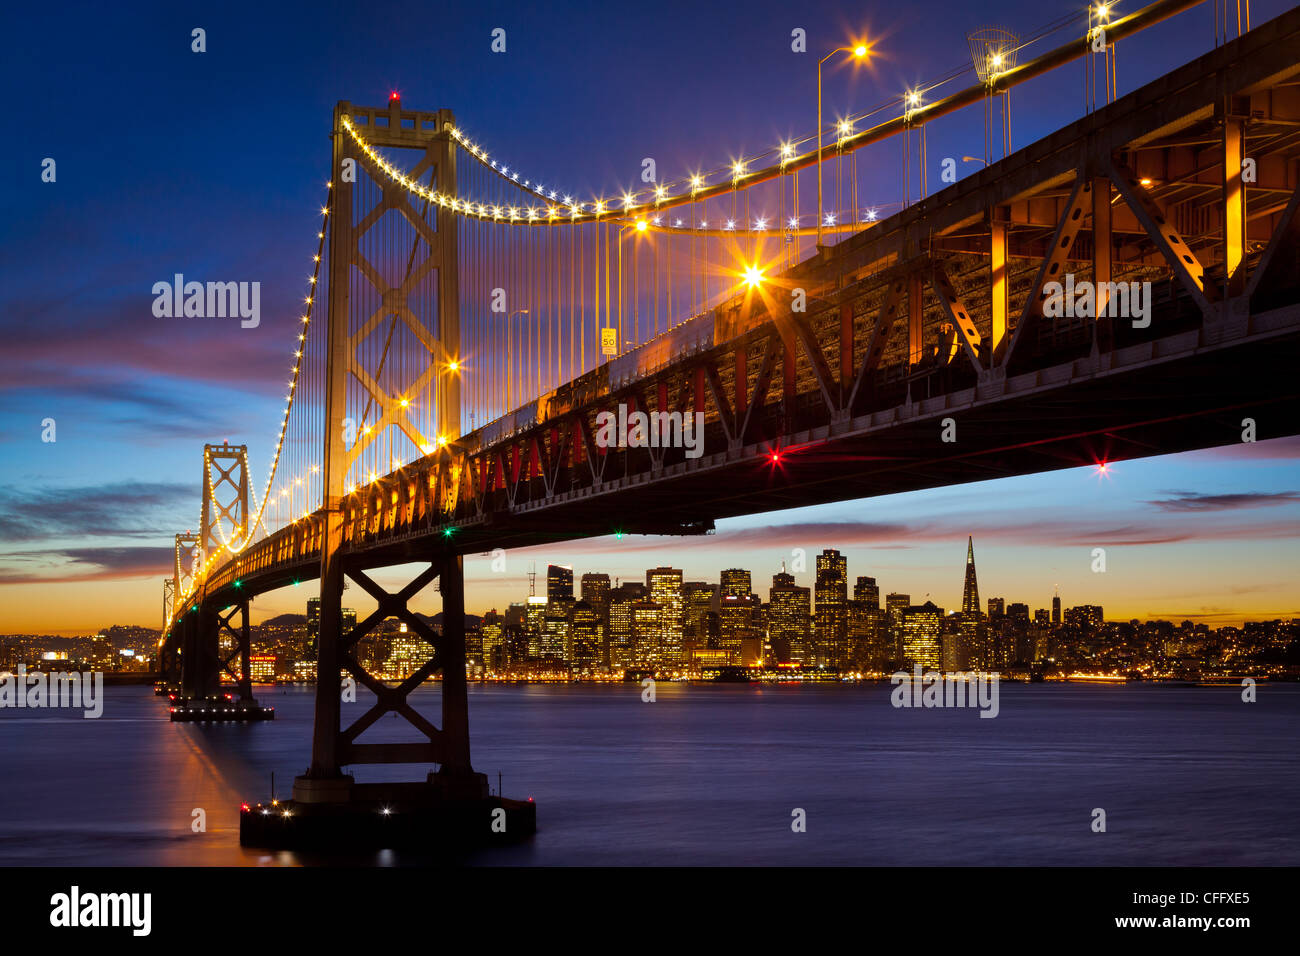 The-San-Francisco--Oakland-Bay-Bridge-kn